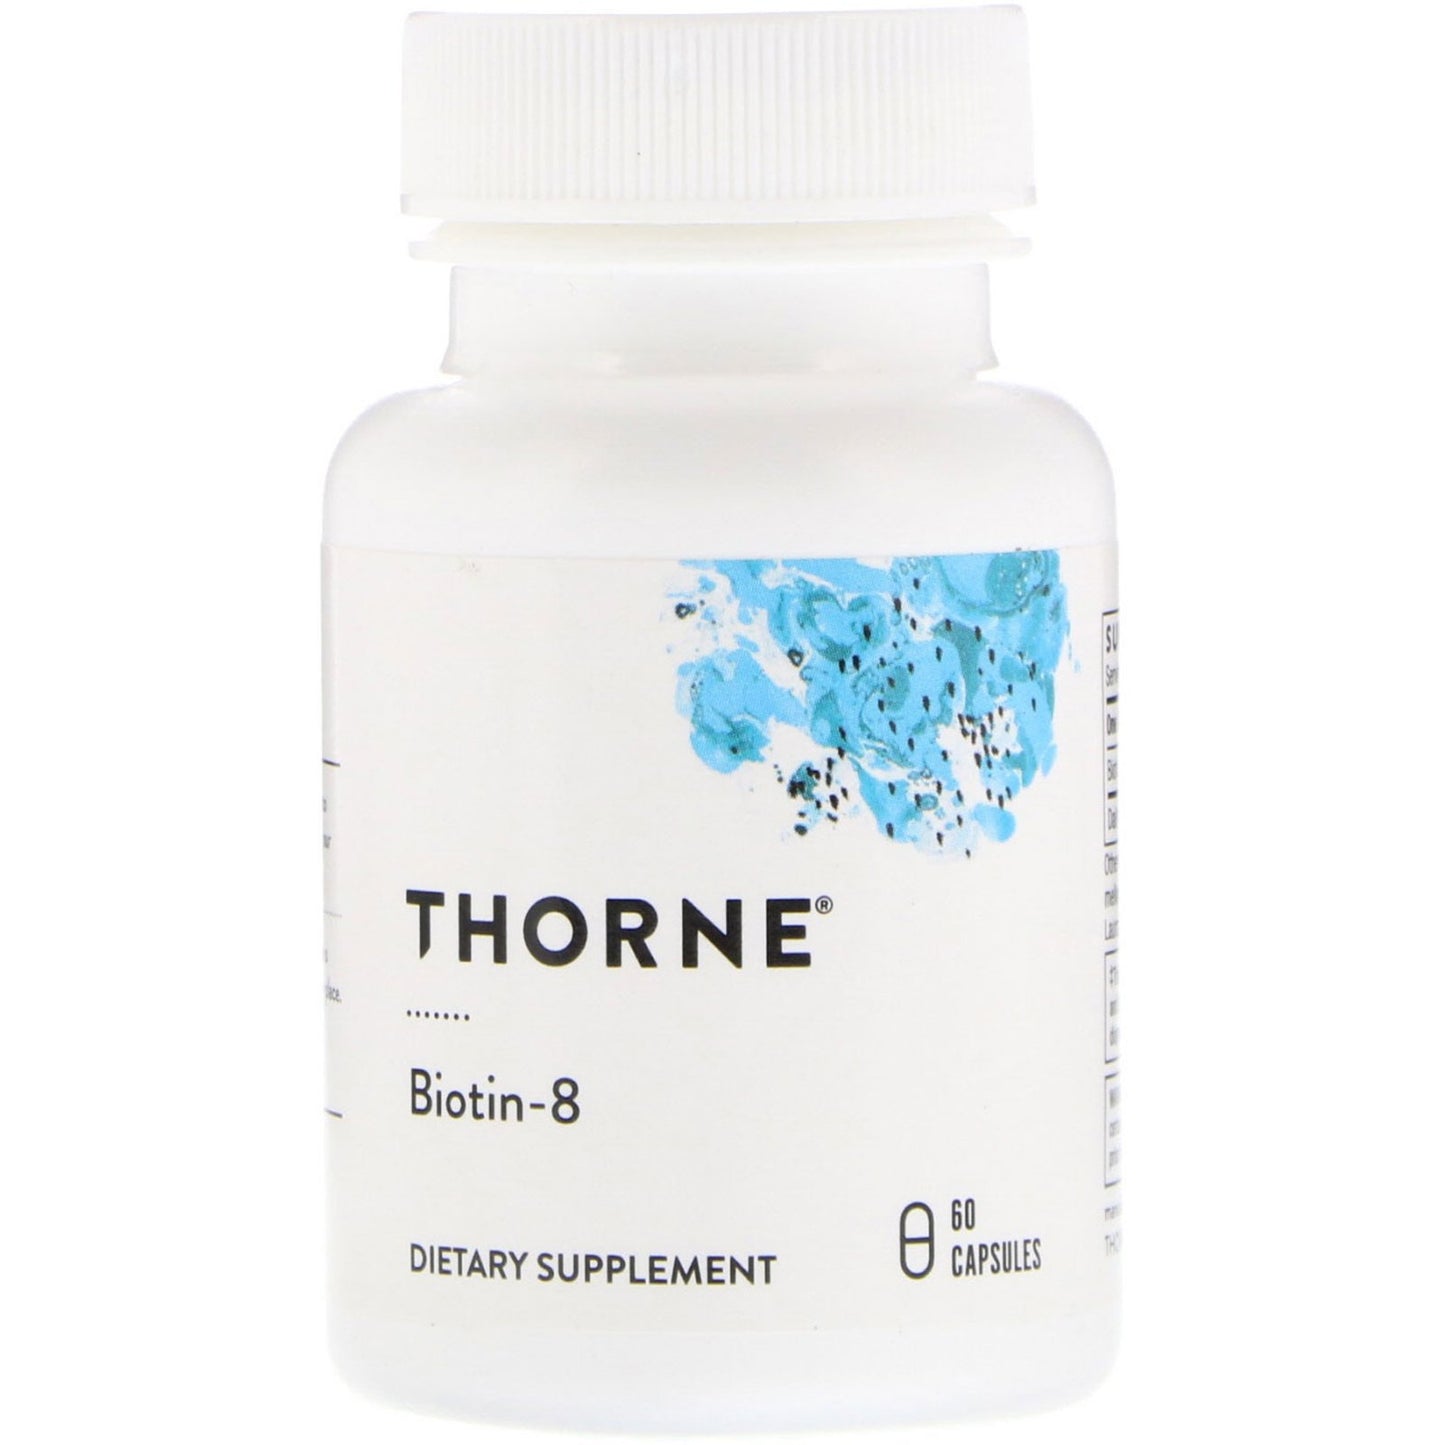 Thorne Biotin-8